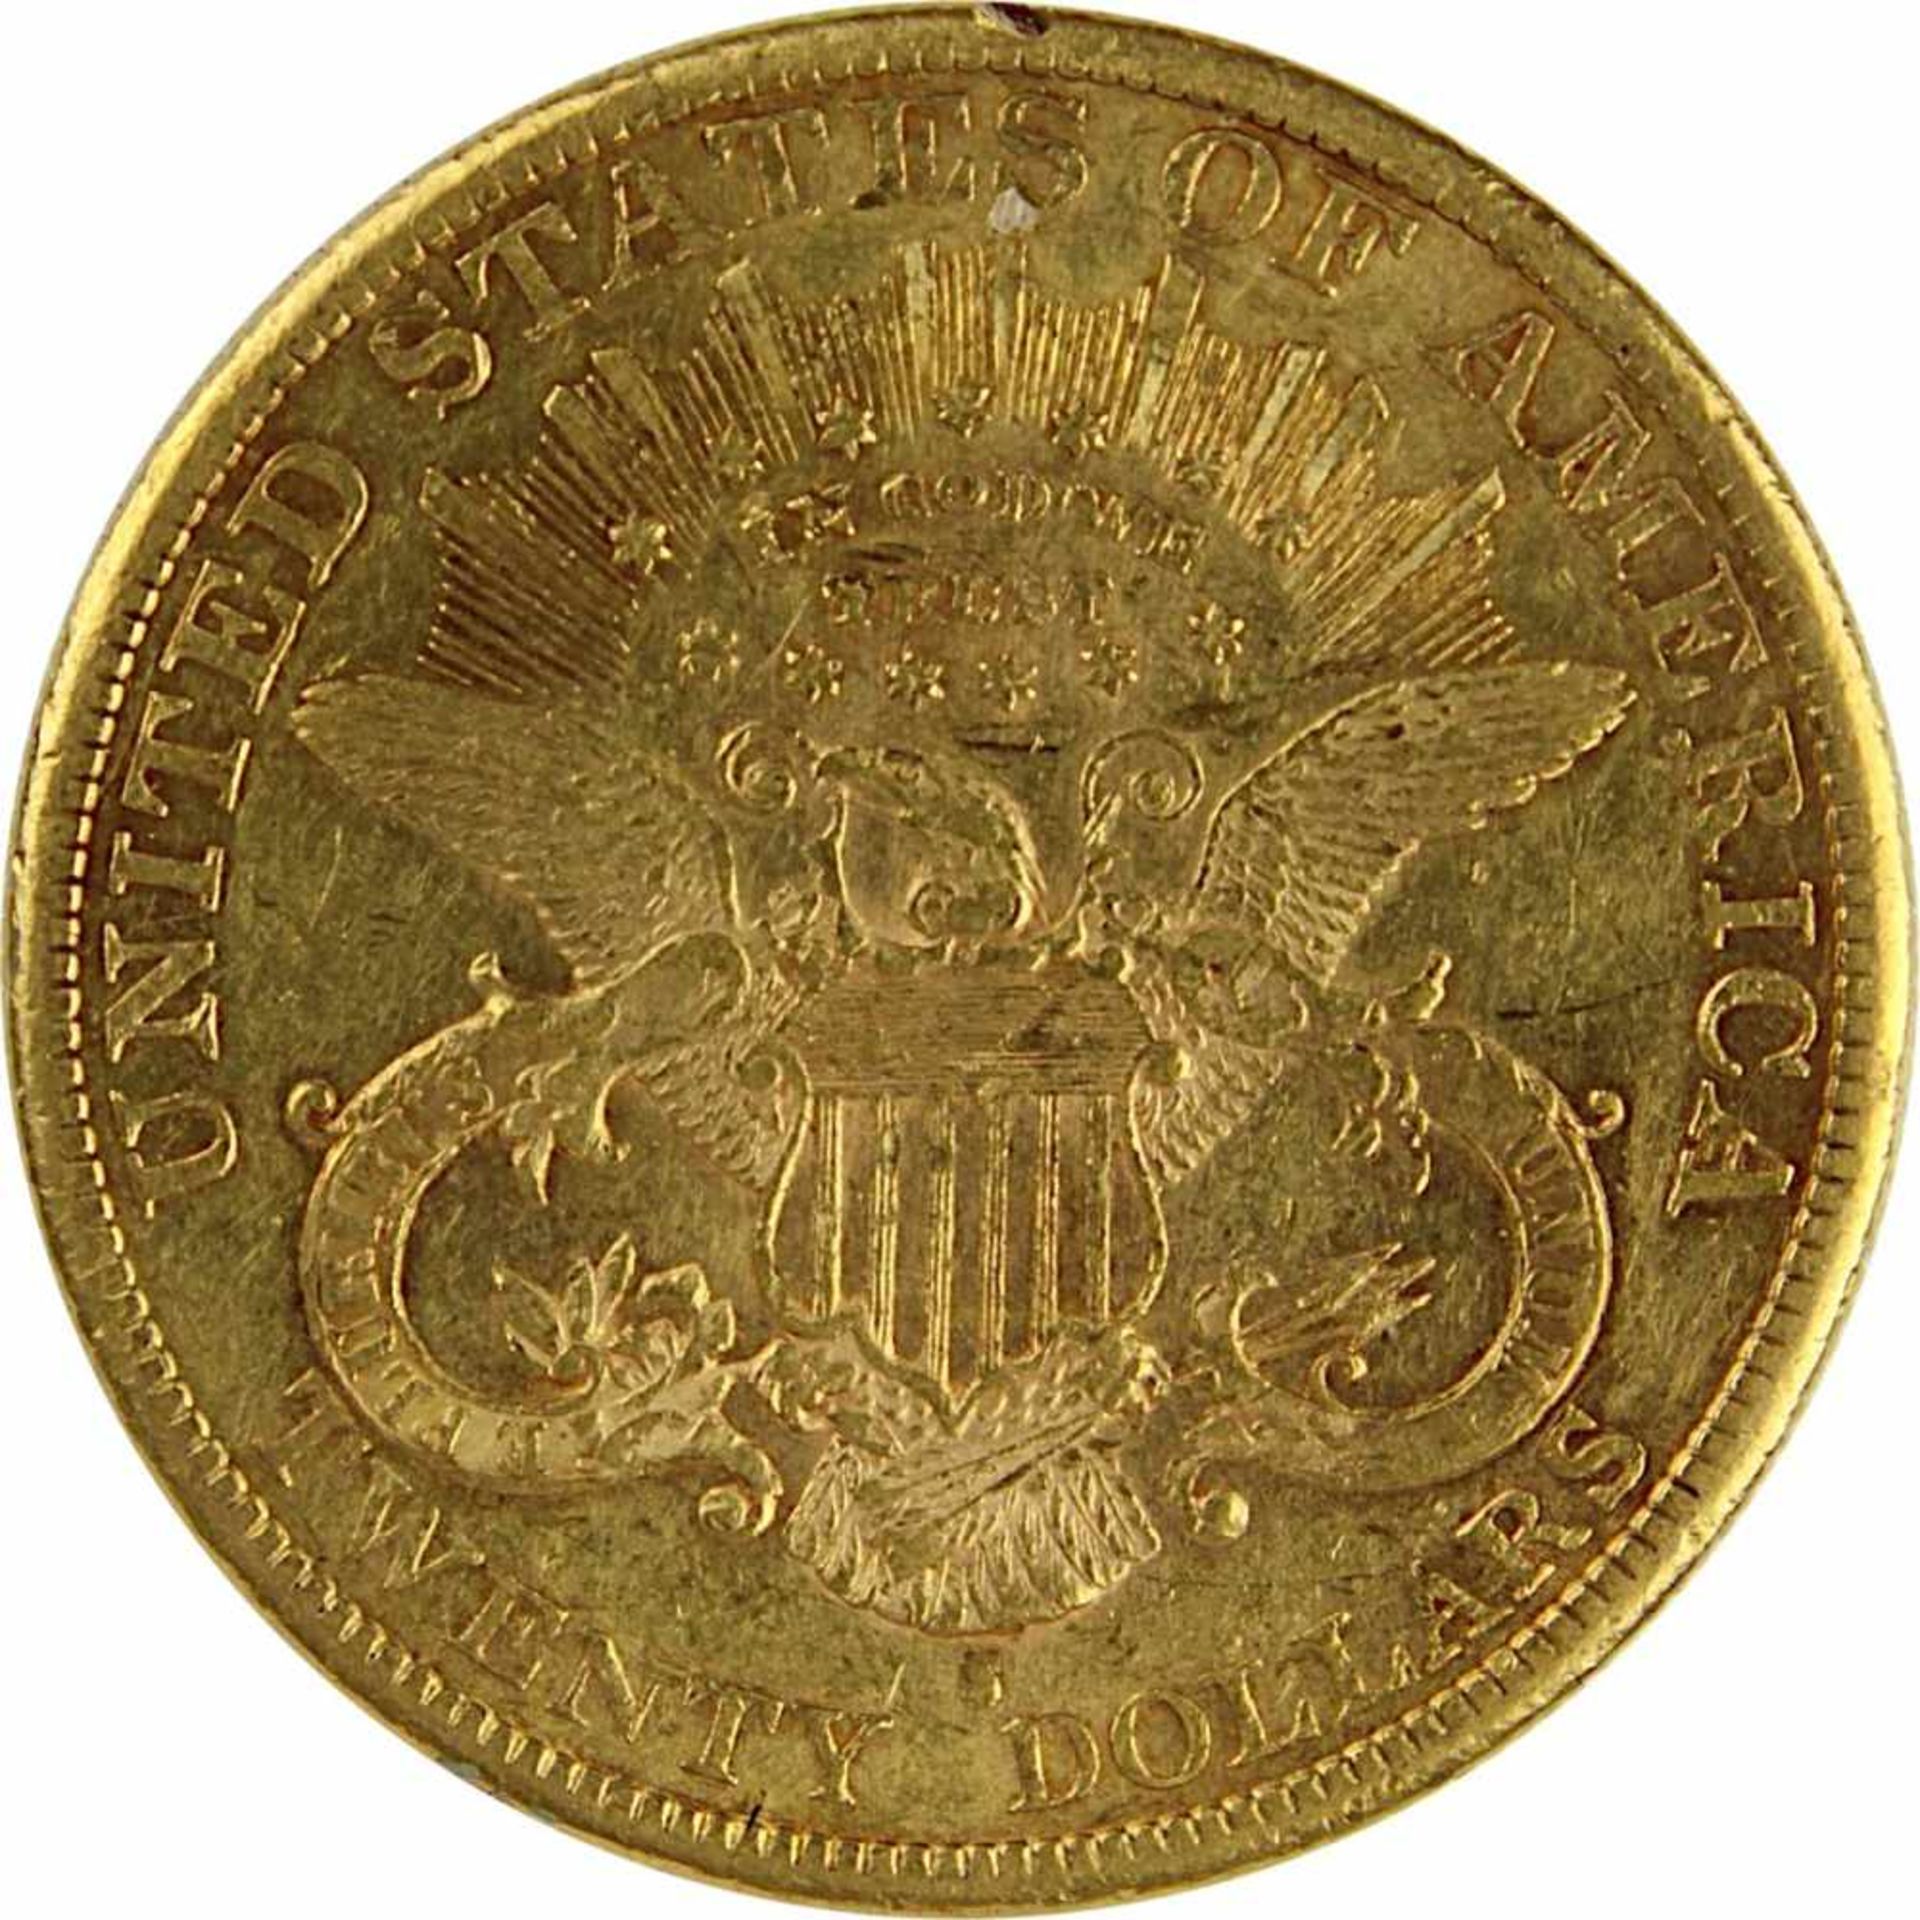 Goldmünze zu 20 Dollar, USA 1891, 900er Gold, Gewicht 1 Unze Feingold, Coroned Head / Eagle, - Bild 3 aus 3